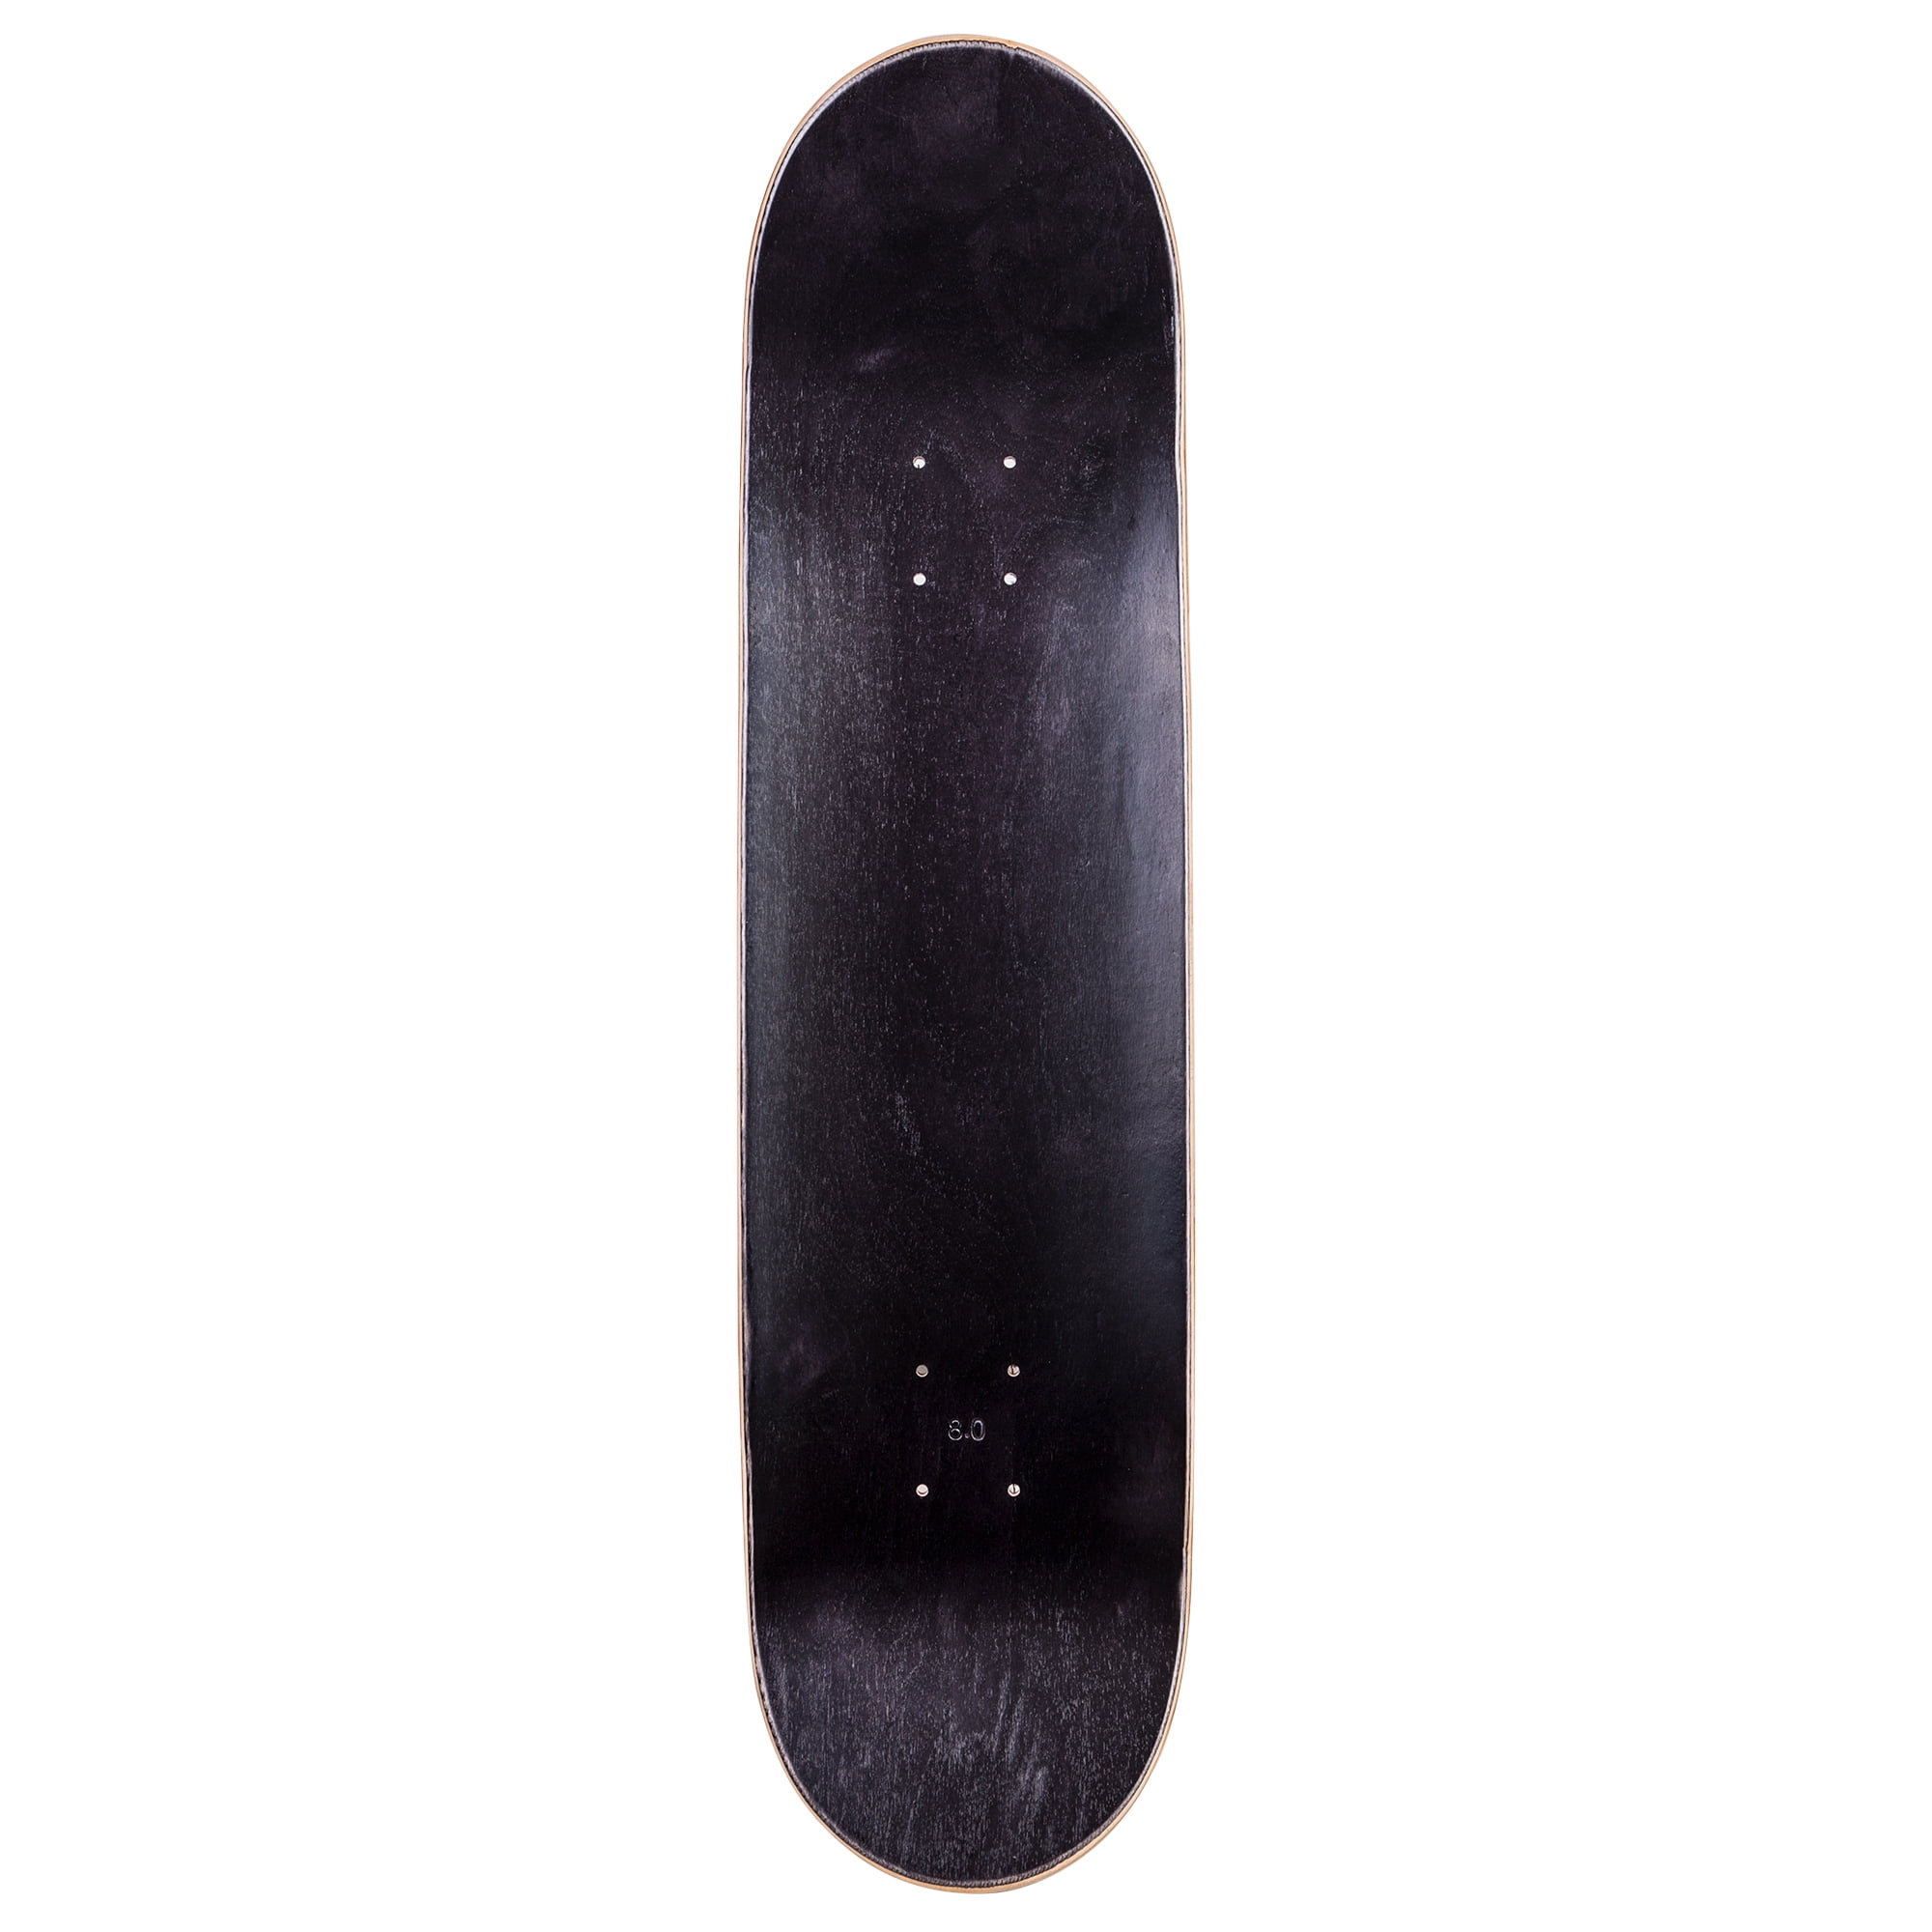 Lot of 2 Cal 7 Blank Maple 8.0" Skateboard Deck Black Bundle Combo 2 Pack Set 